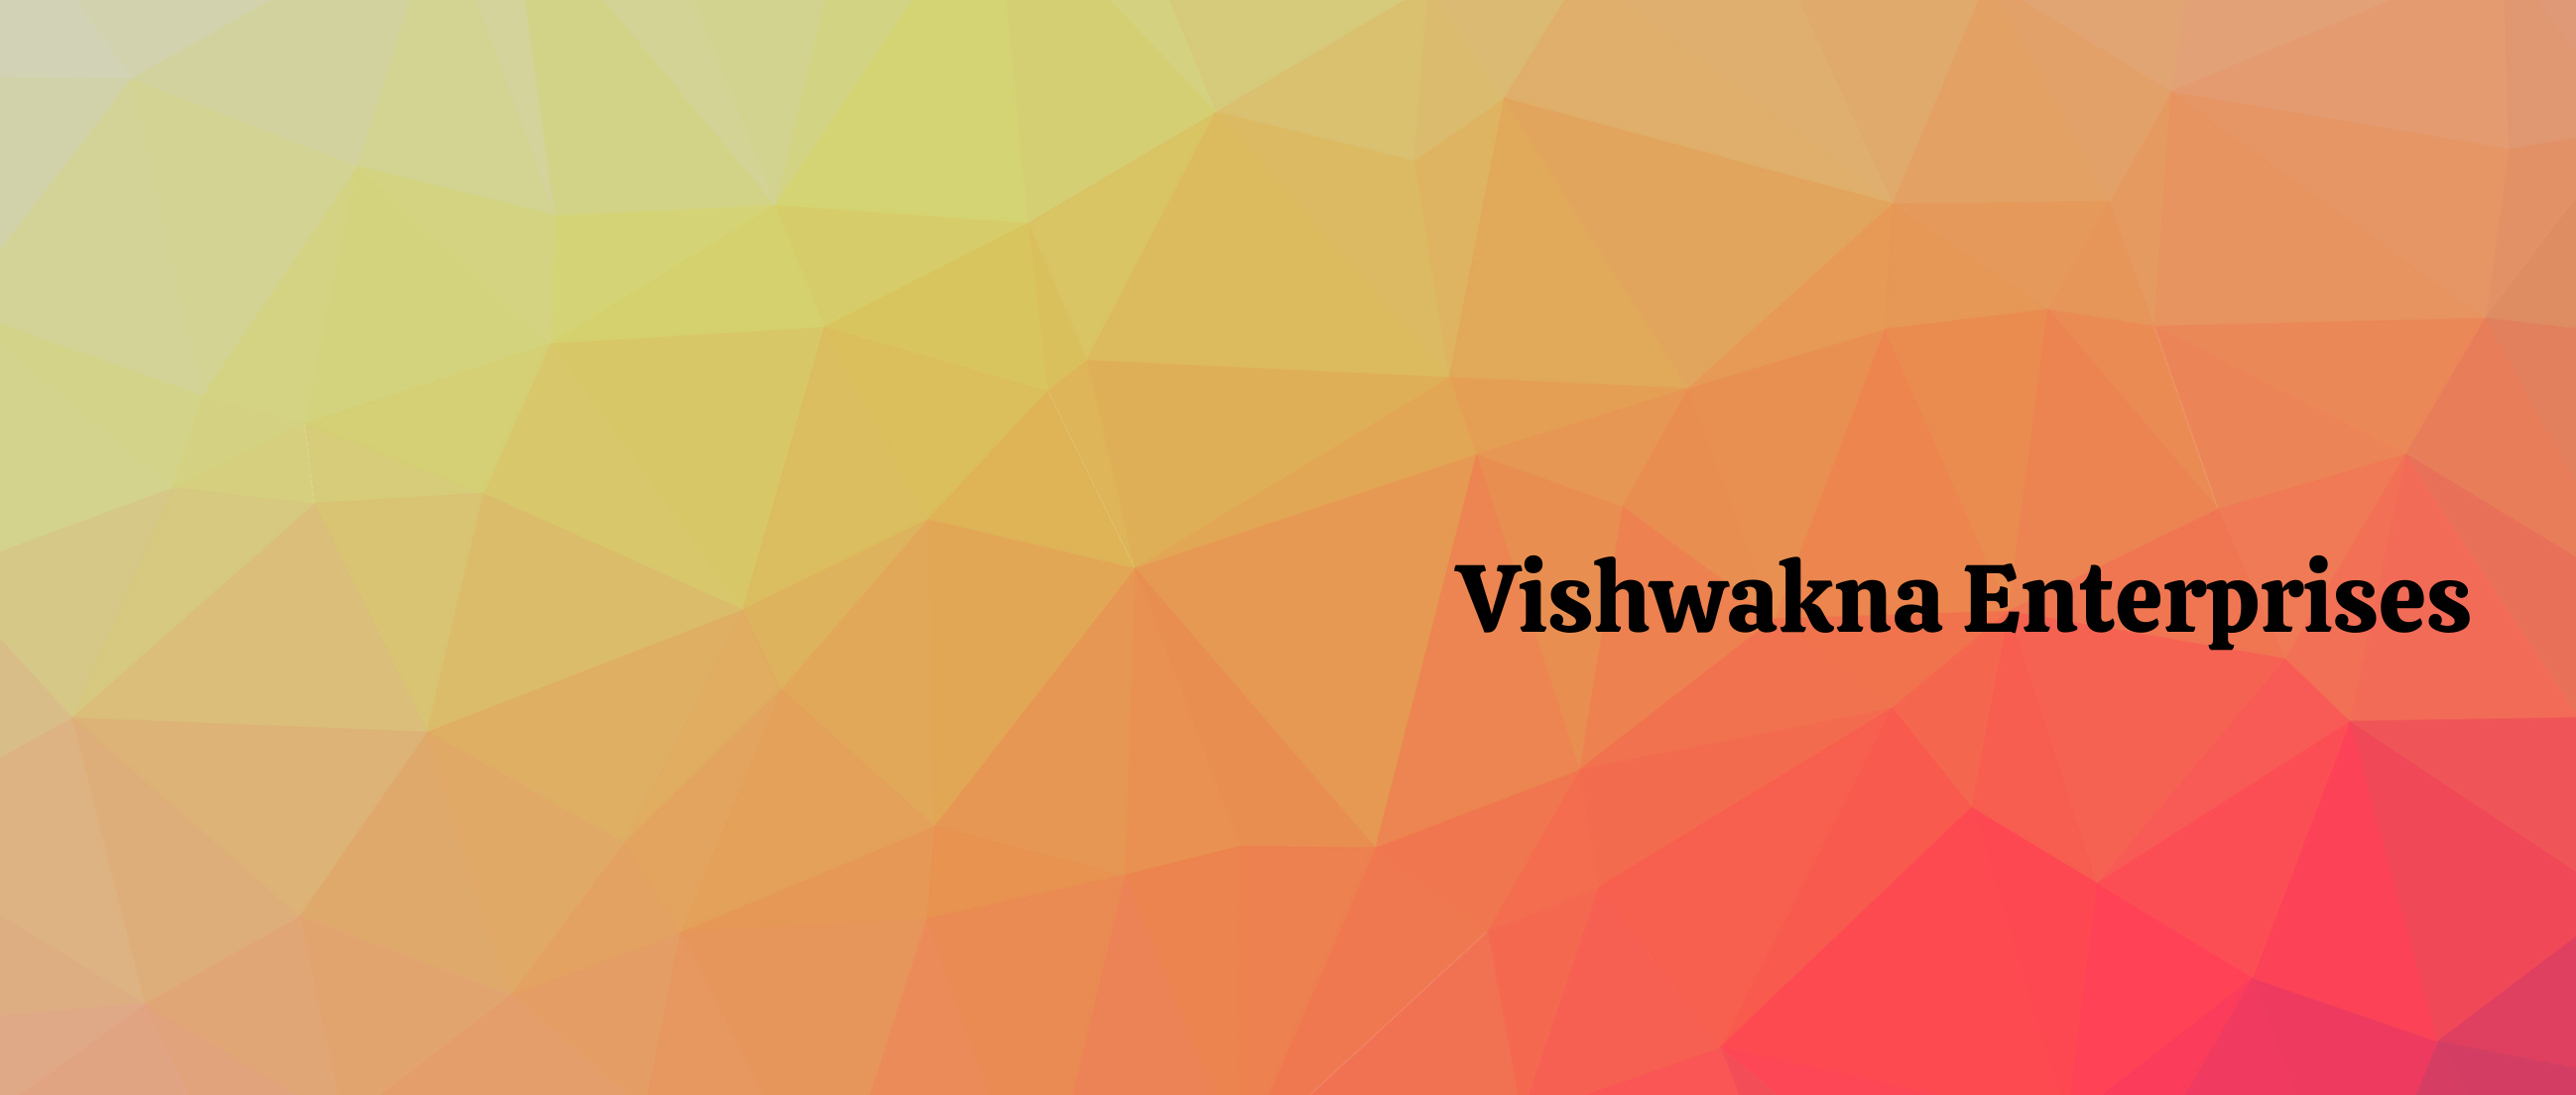 Vishwakna Enterprises